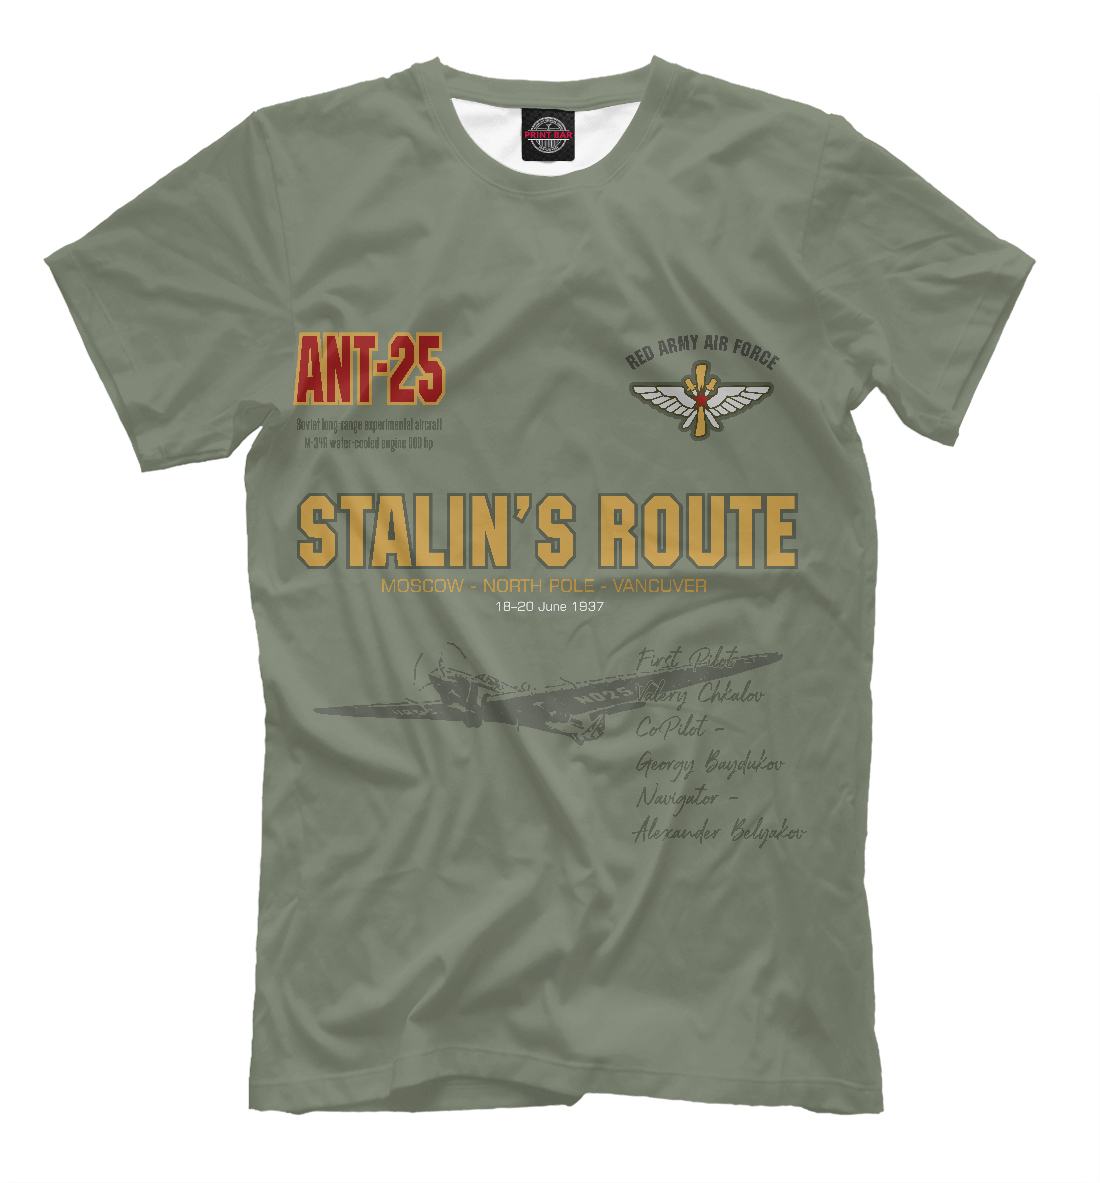 Футболка Сталинский маршрут (Ант-25) для мужчин, артикул: VVS-536549-fut-2mp